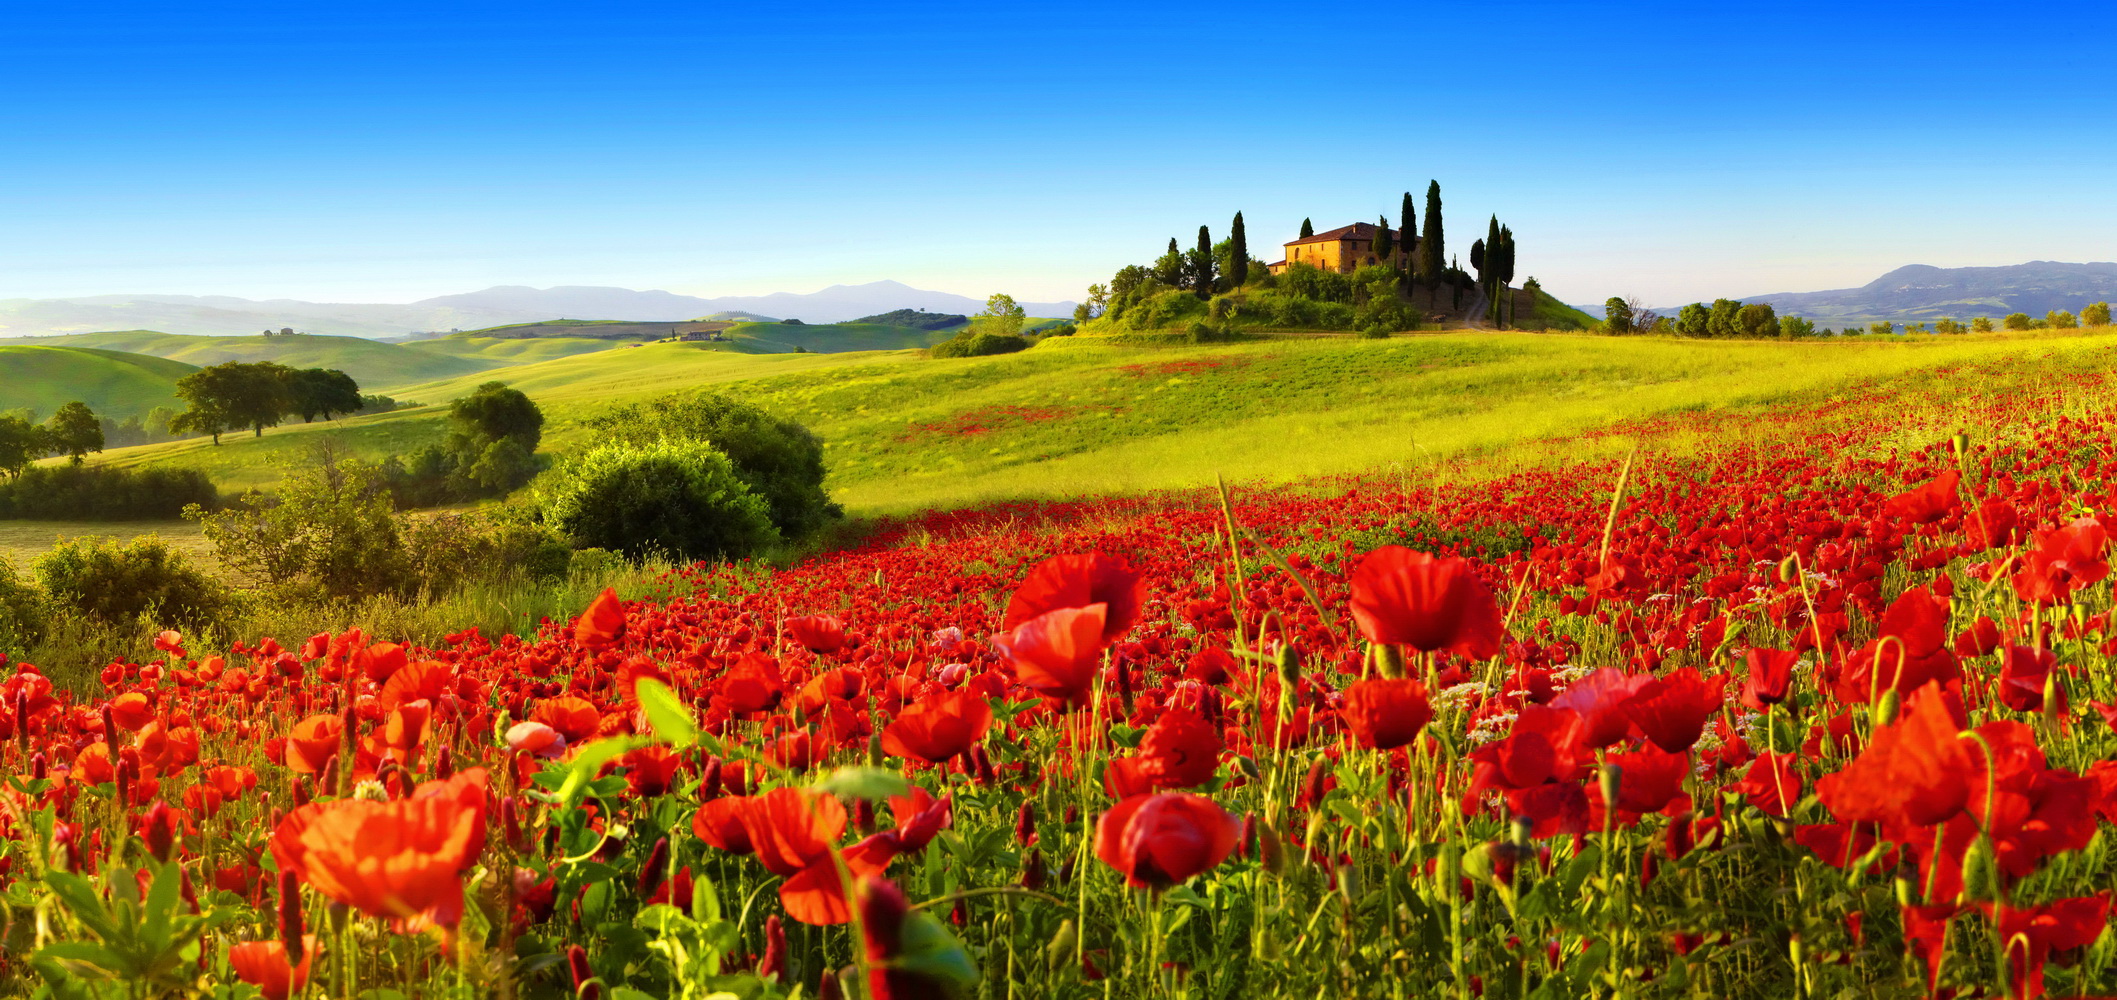 Toscana , HD Wallpaper & Backgrounds